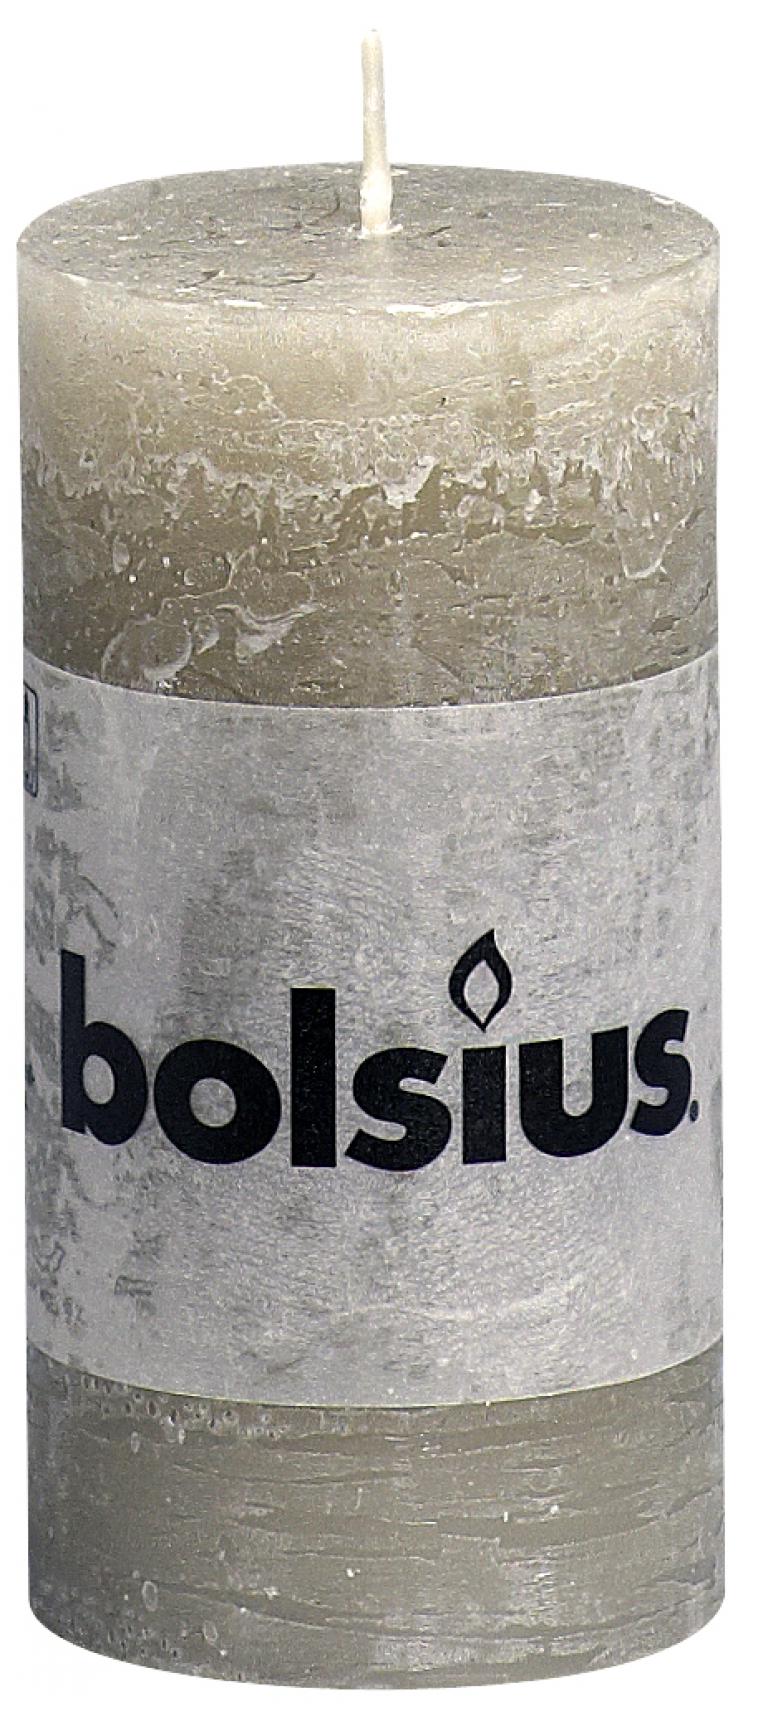 Bougie cylindre rustique Fading métallique or 80/68 - photo 10